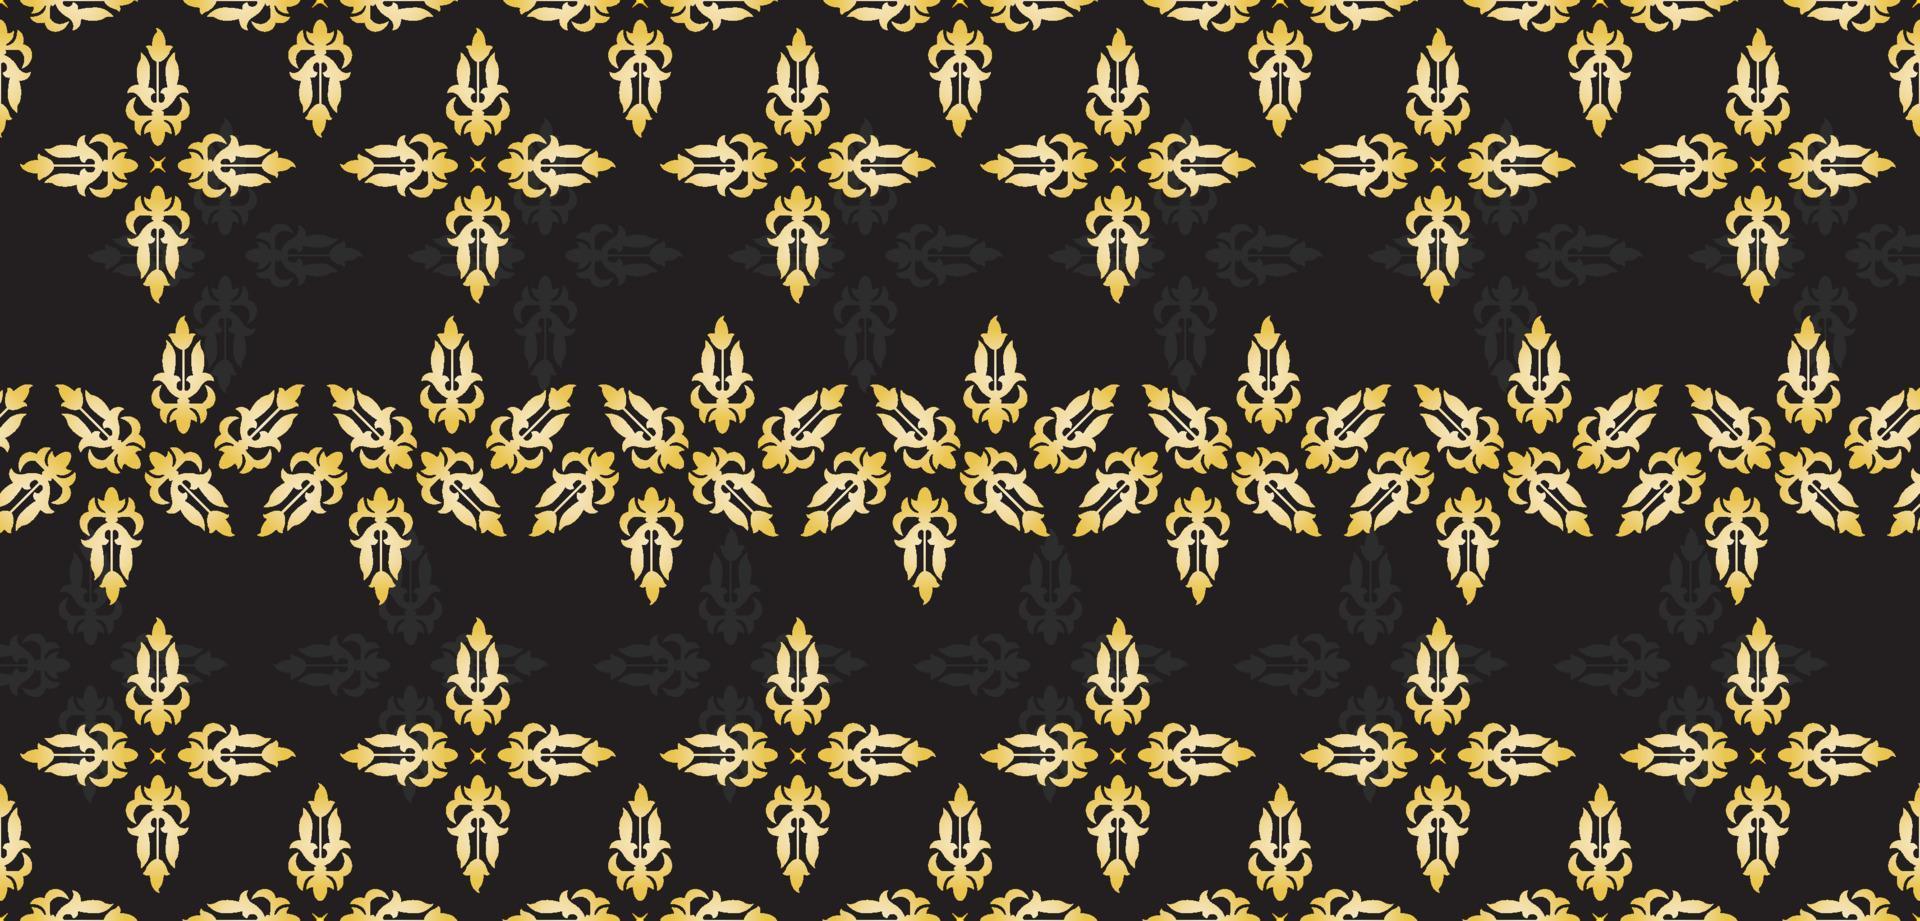 Indonesisch traditioneel batik patronen van riau, Maleisië, Maleis traditioneel ontwerp cultuur melayu Aan zwart kleding stof achtergrond, goud draden vector